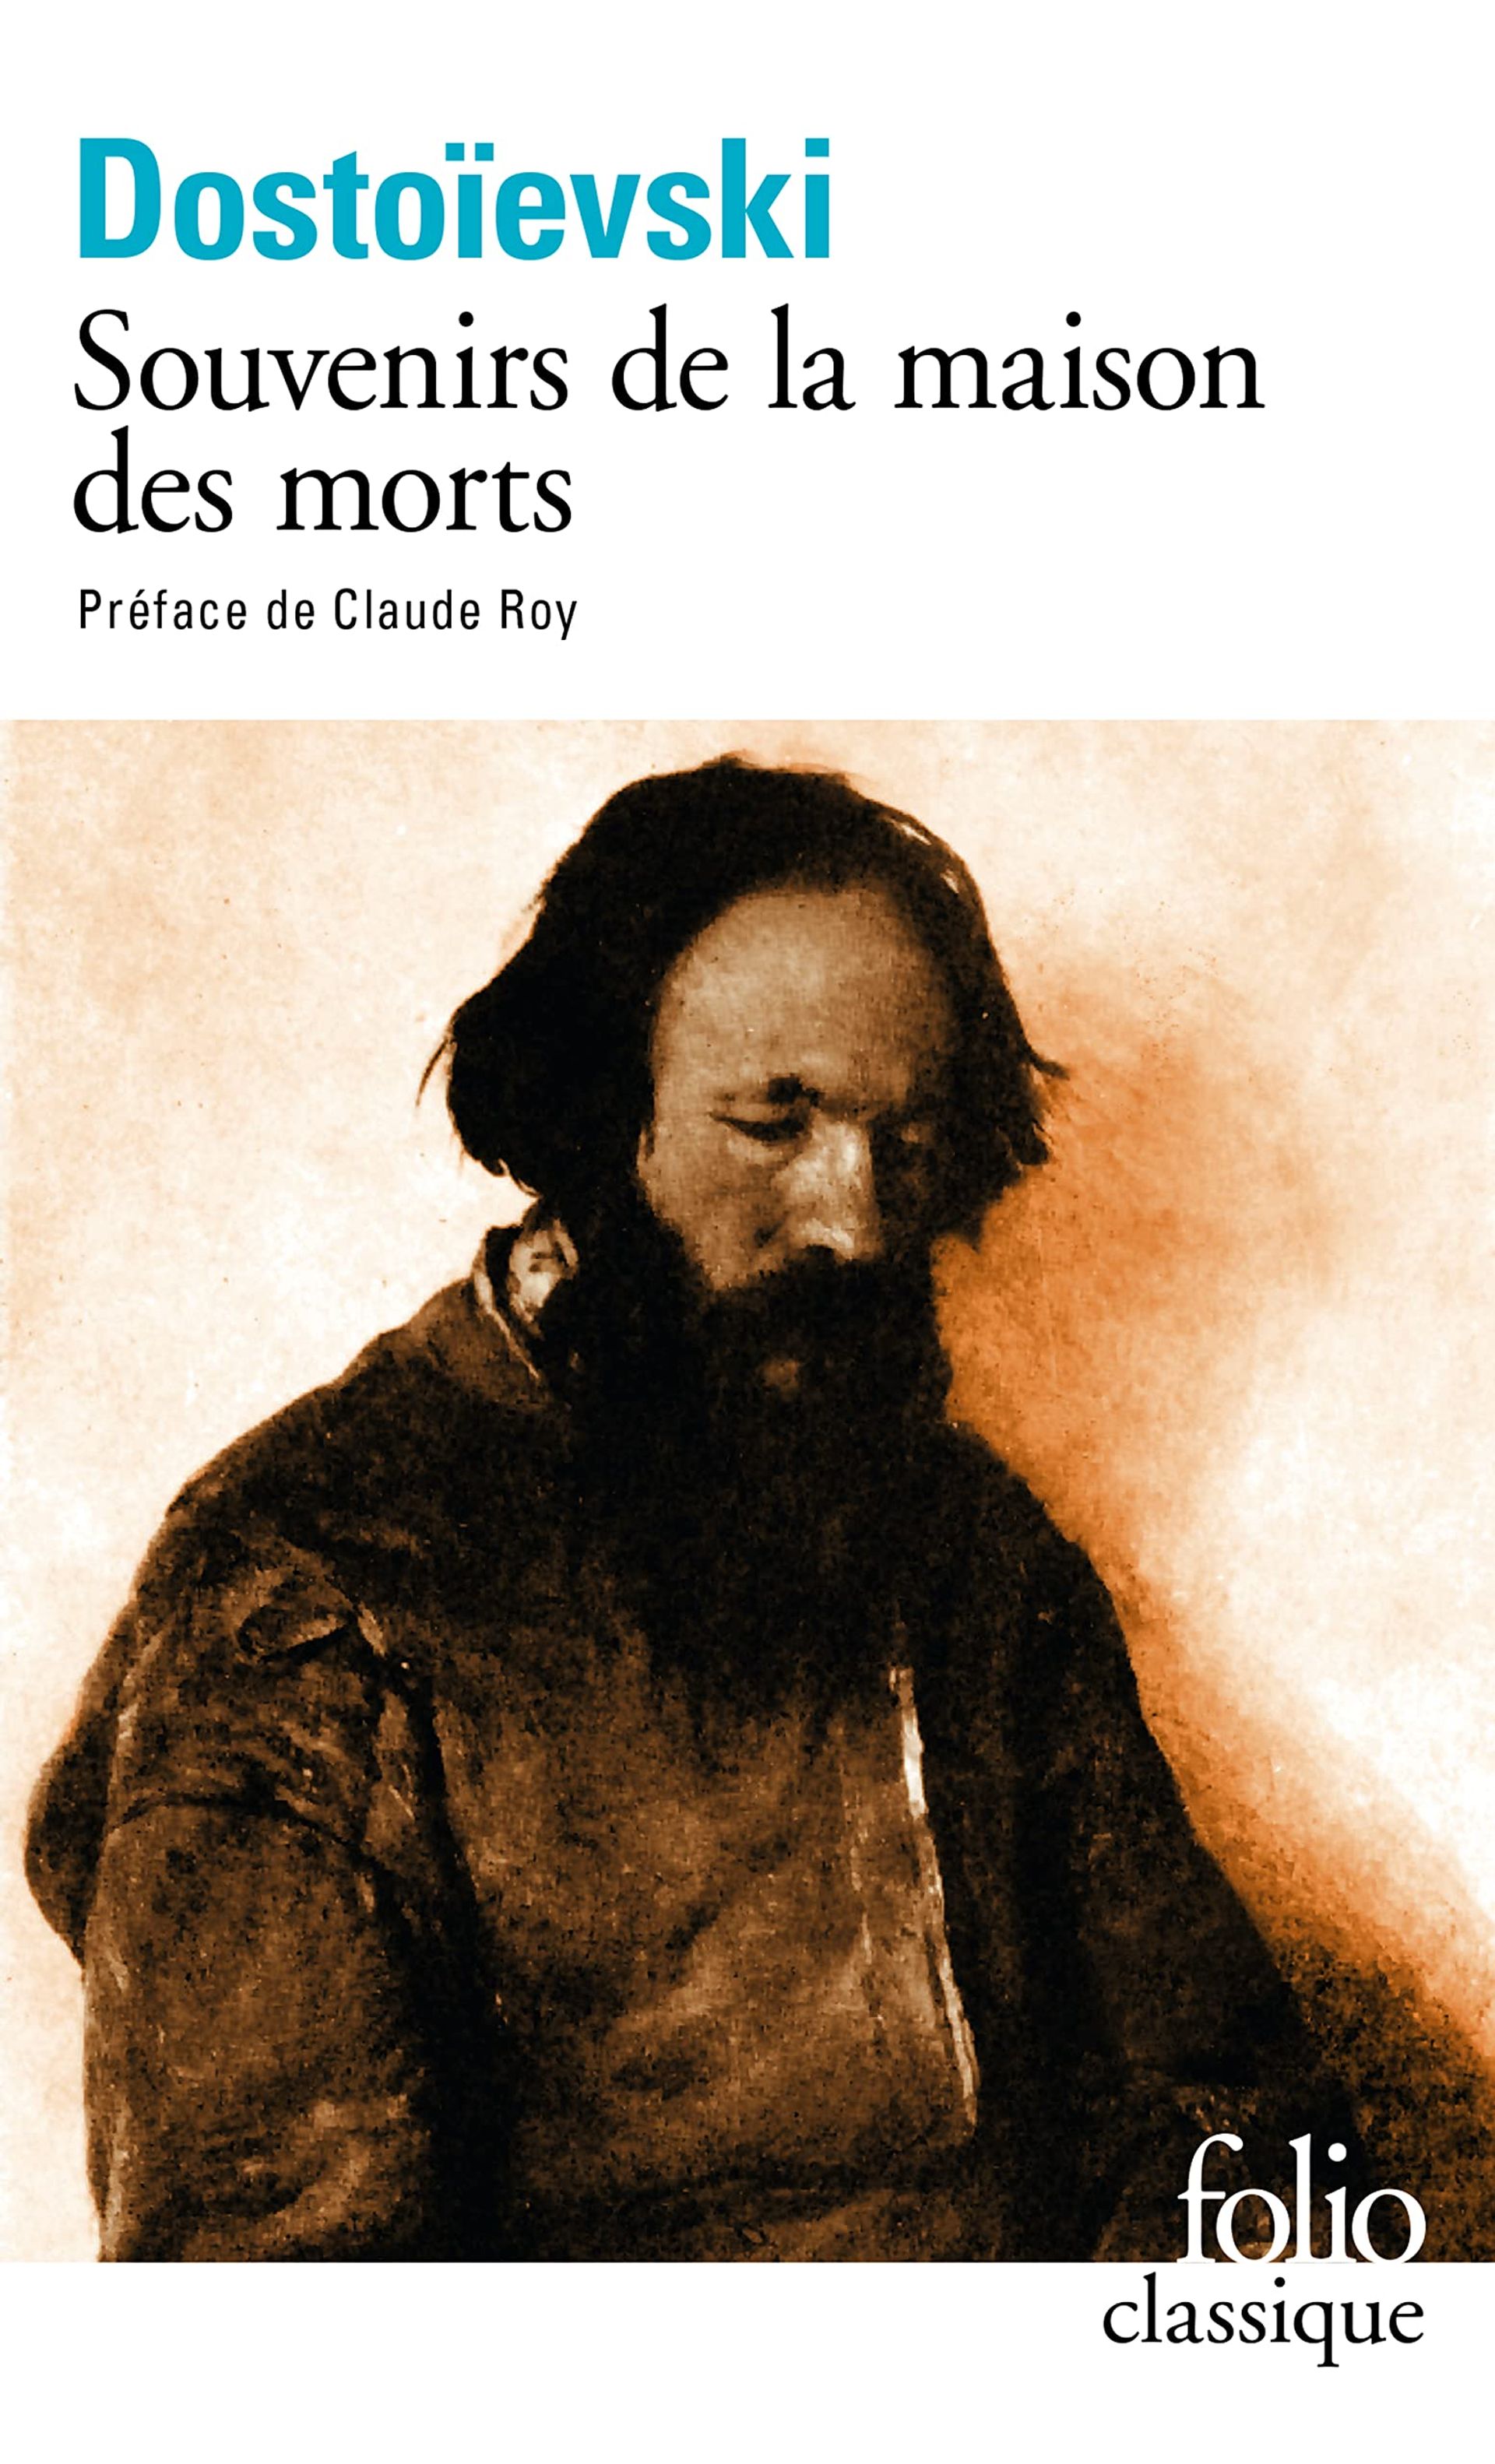 "Souvenirs de la maison des morts", Fiodor Dostoïevski, Folio classique, 1977.